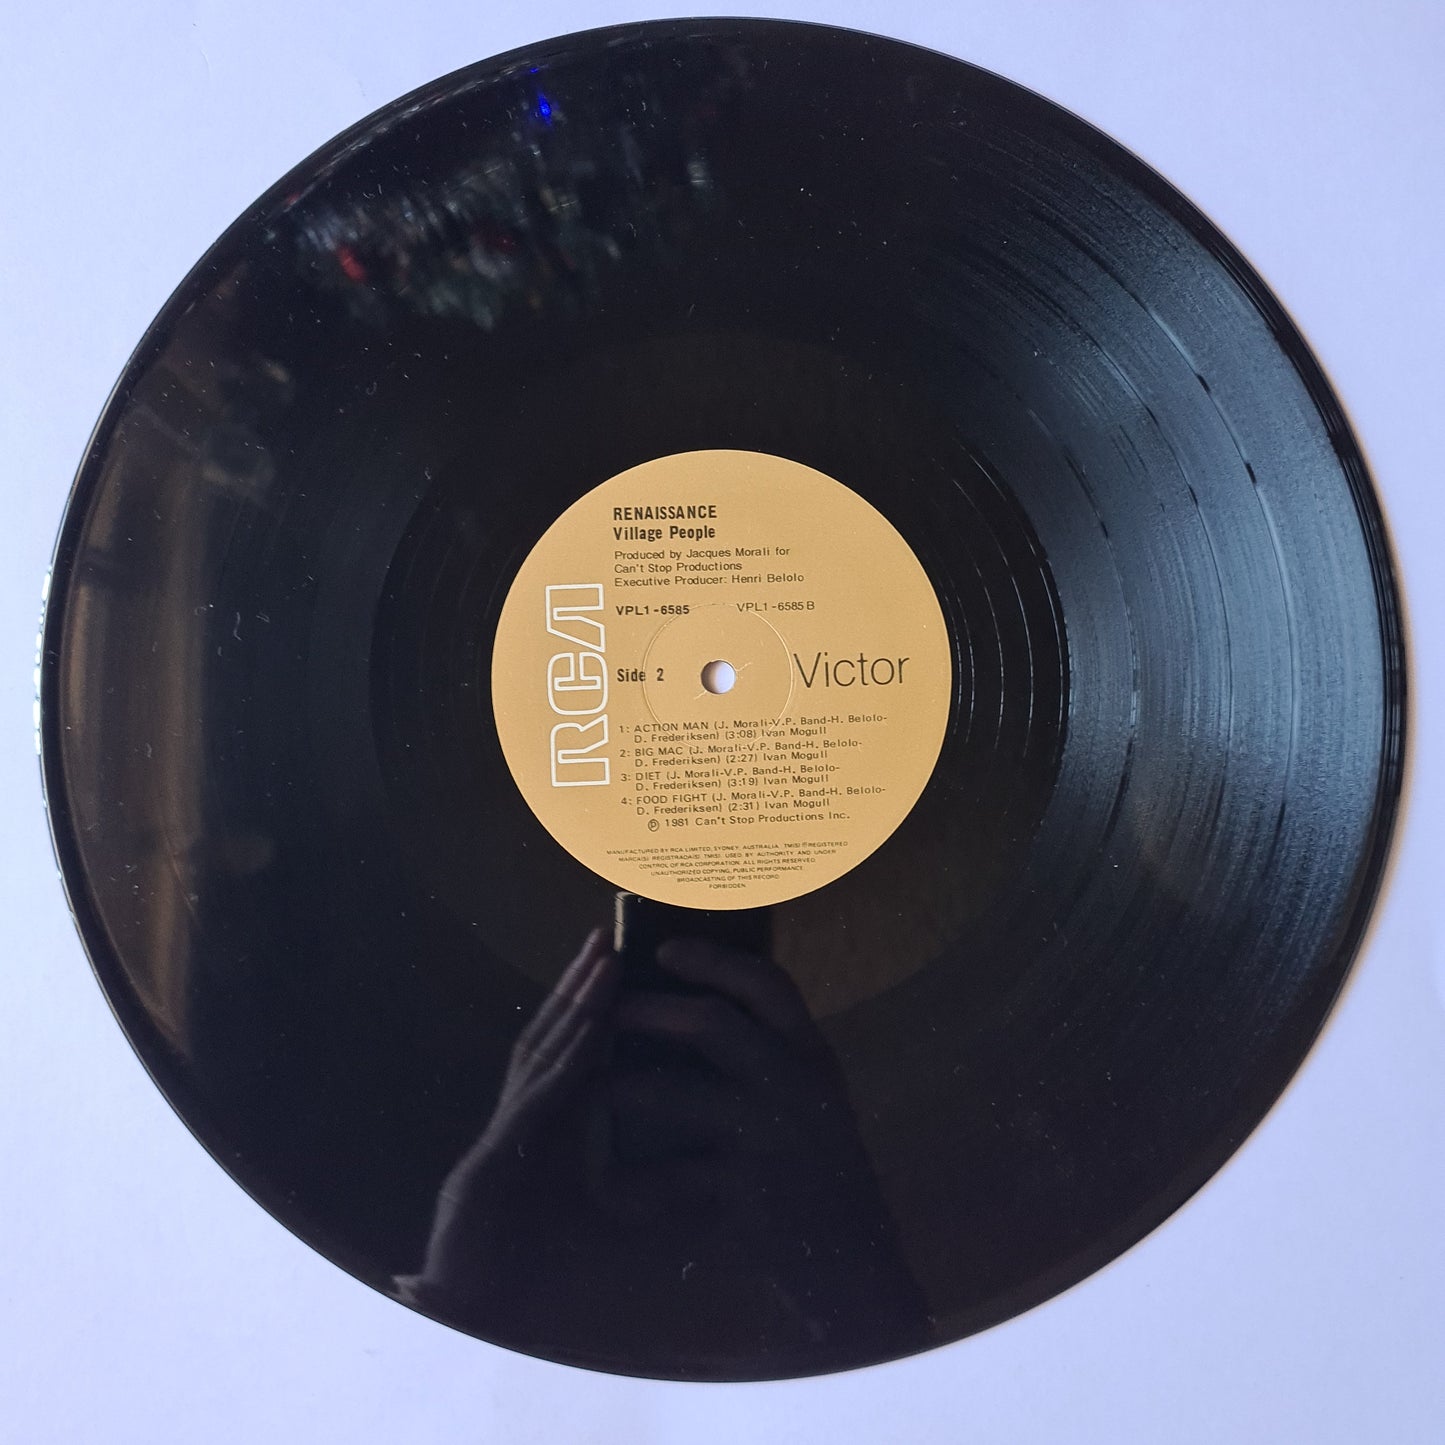 Village People – Renaissance - 1981 - Vinyl Record